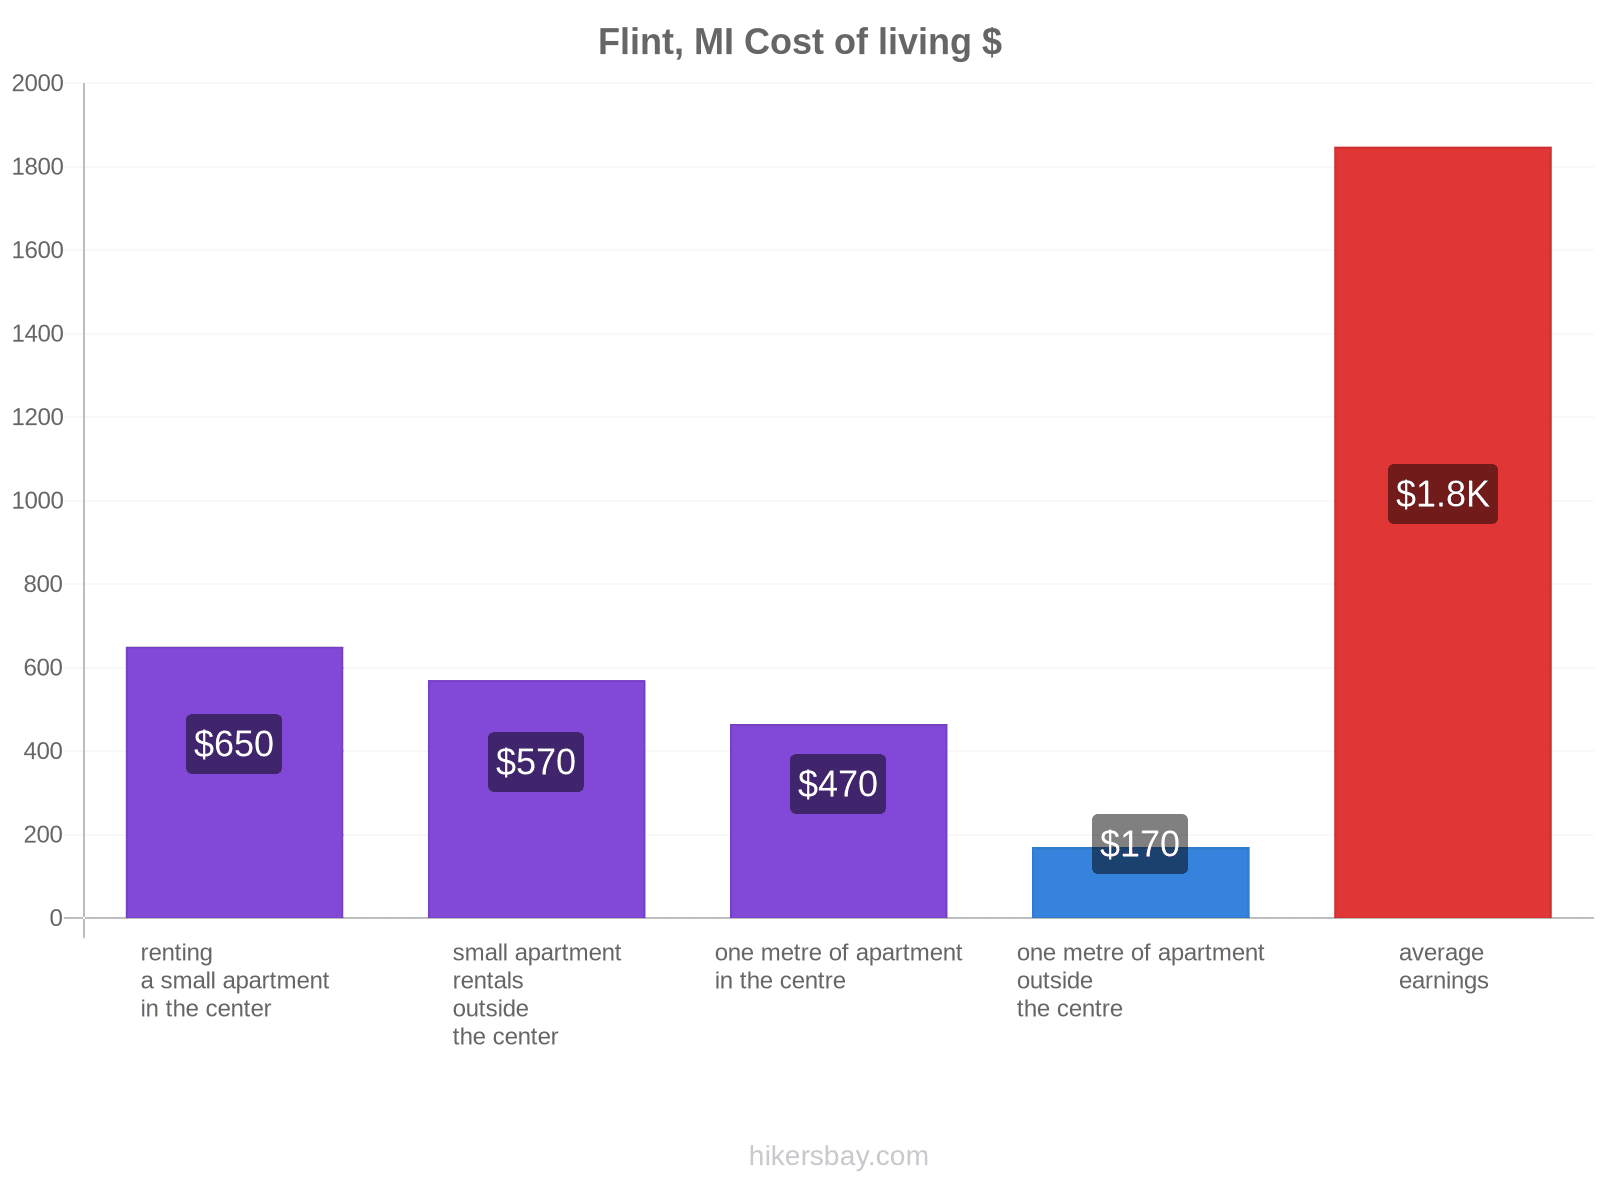 Flint, MI cost of living hikersbay.com